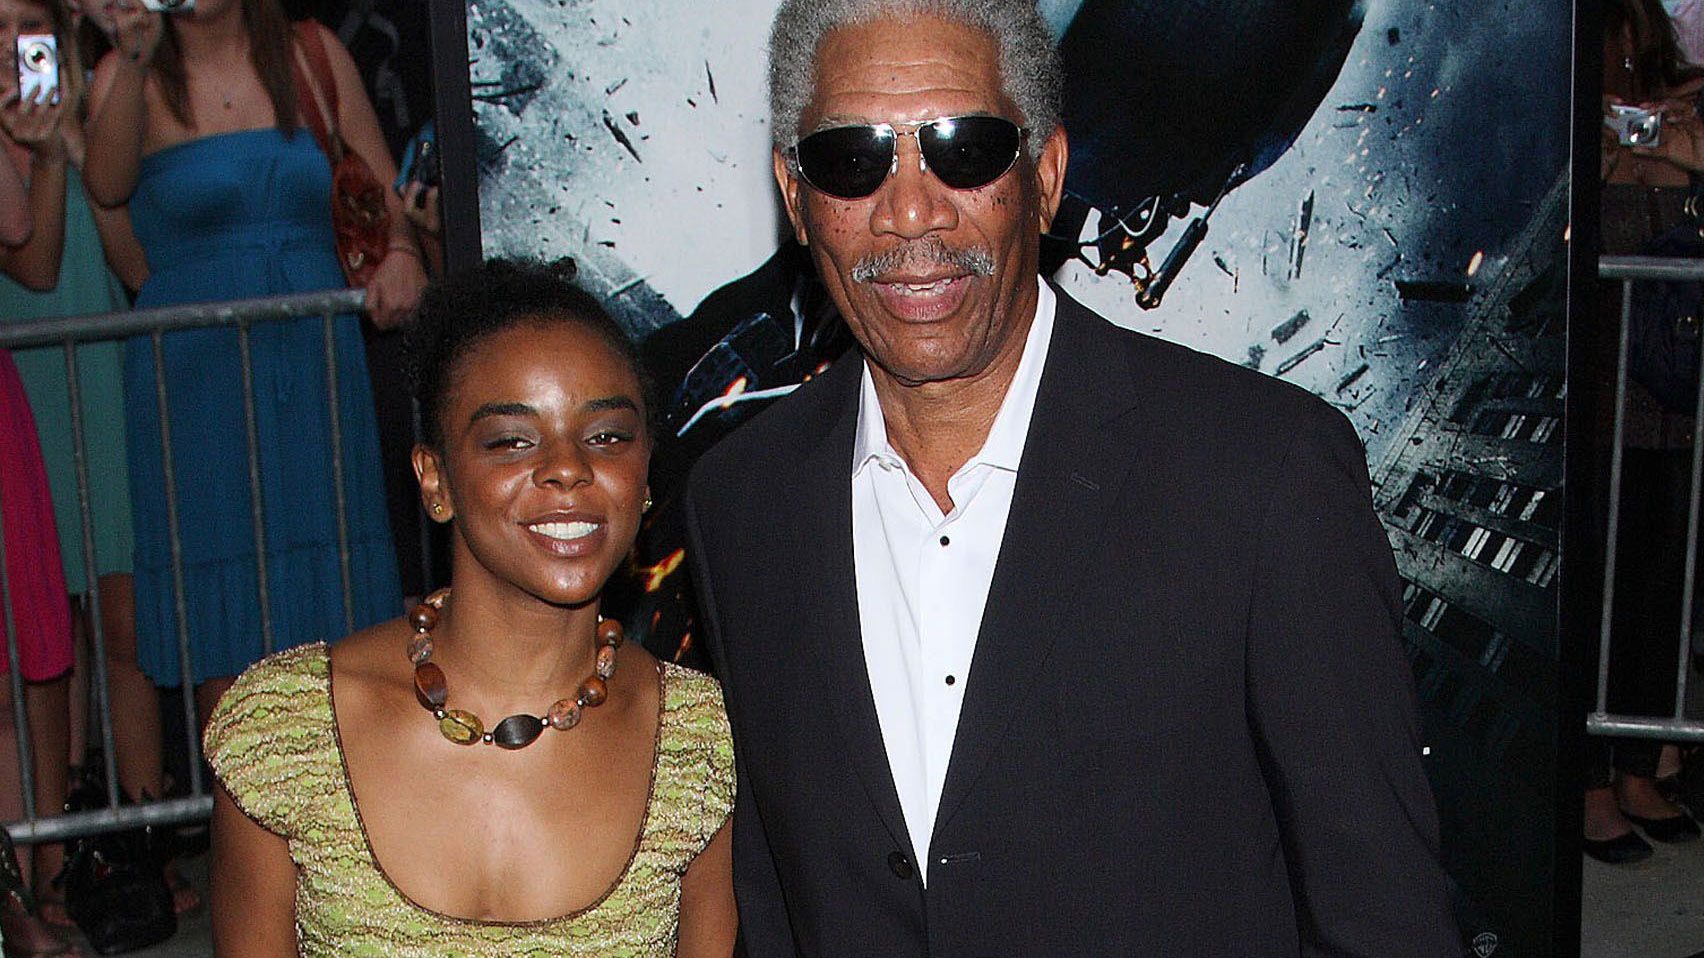 Morgan Freeman’s affair